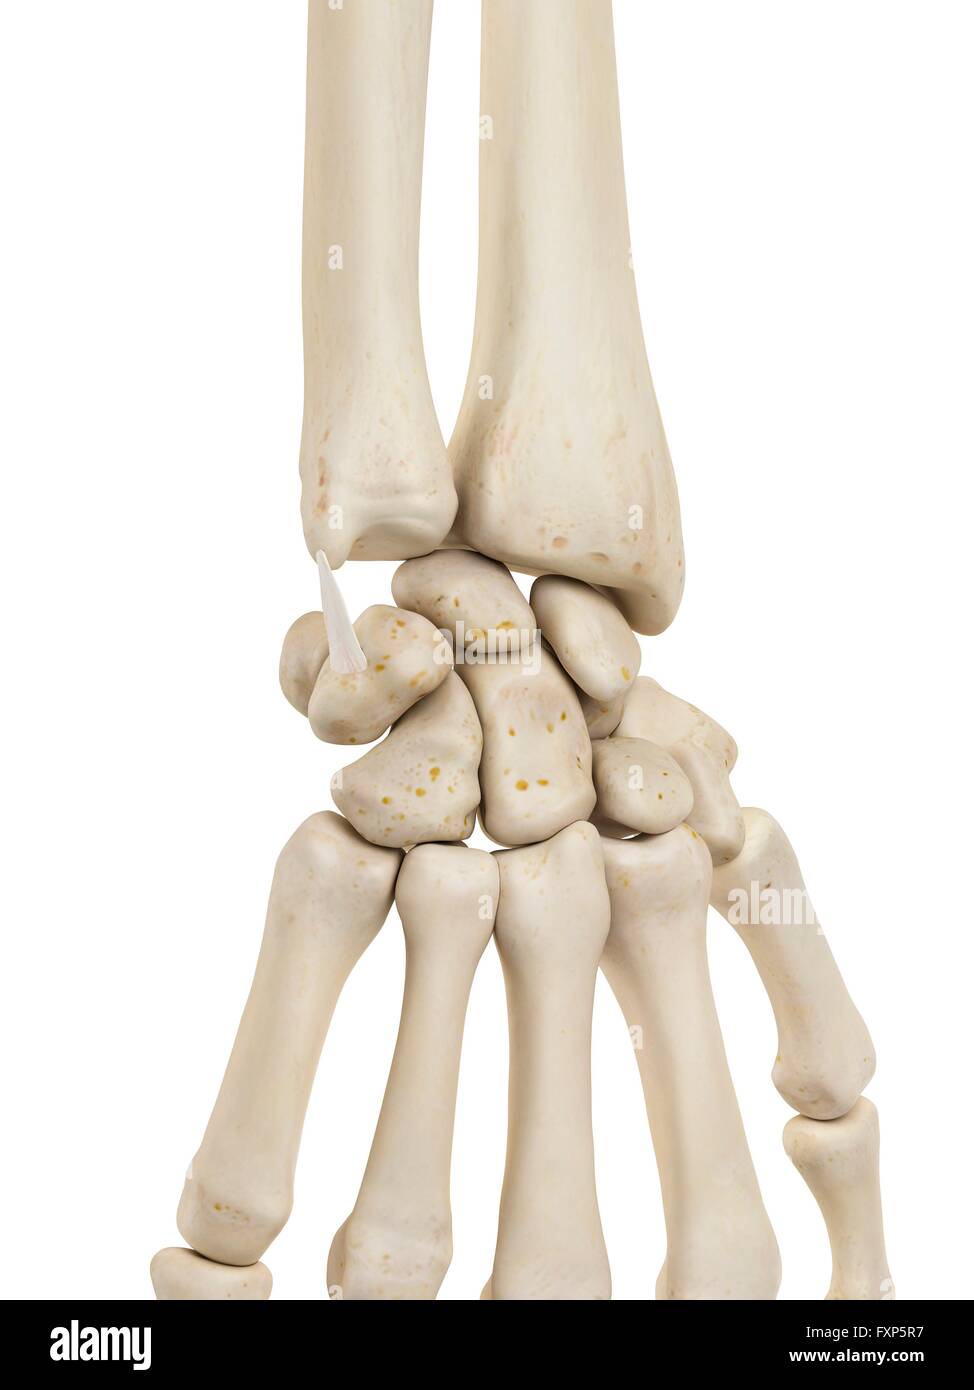 Wrist Bones Stock Photos & Wrist Bones Stock Images - Alamy